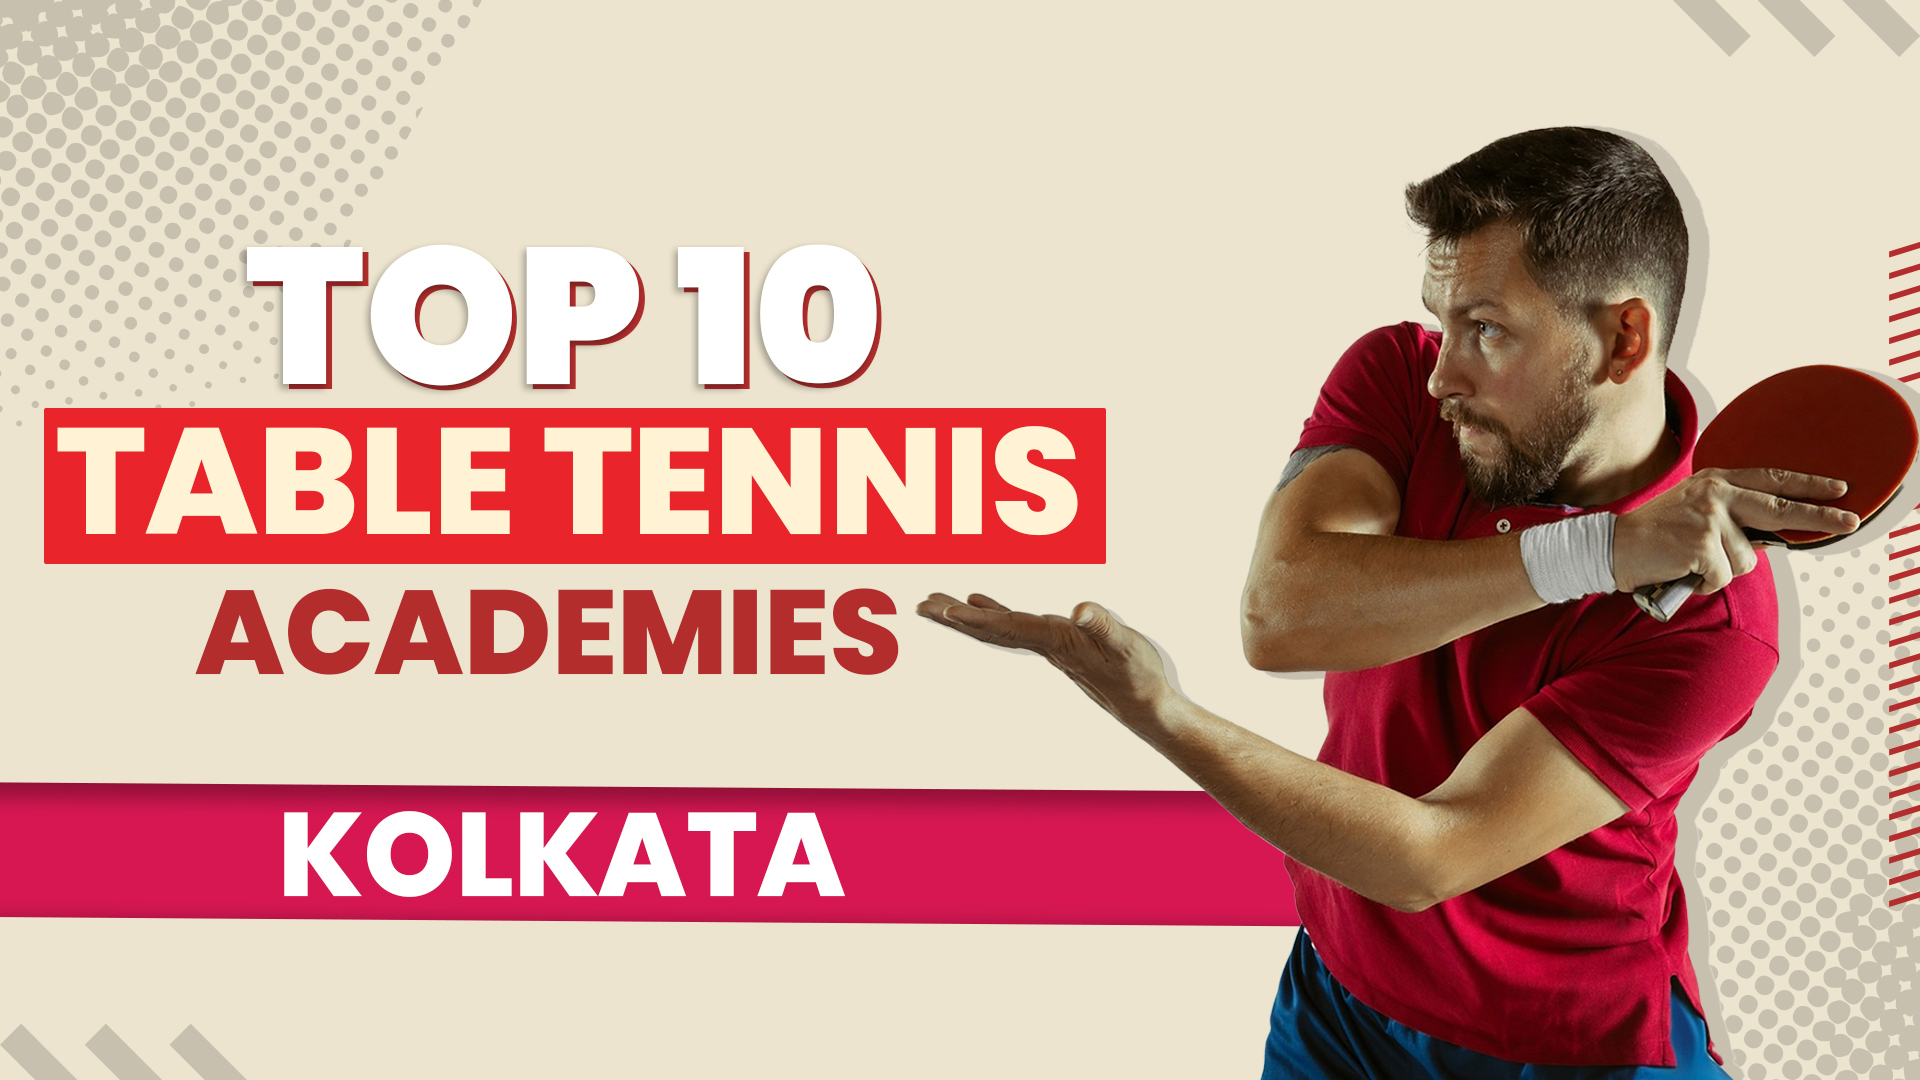 Top 10 Table Tennis Academies in Kolkata, India